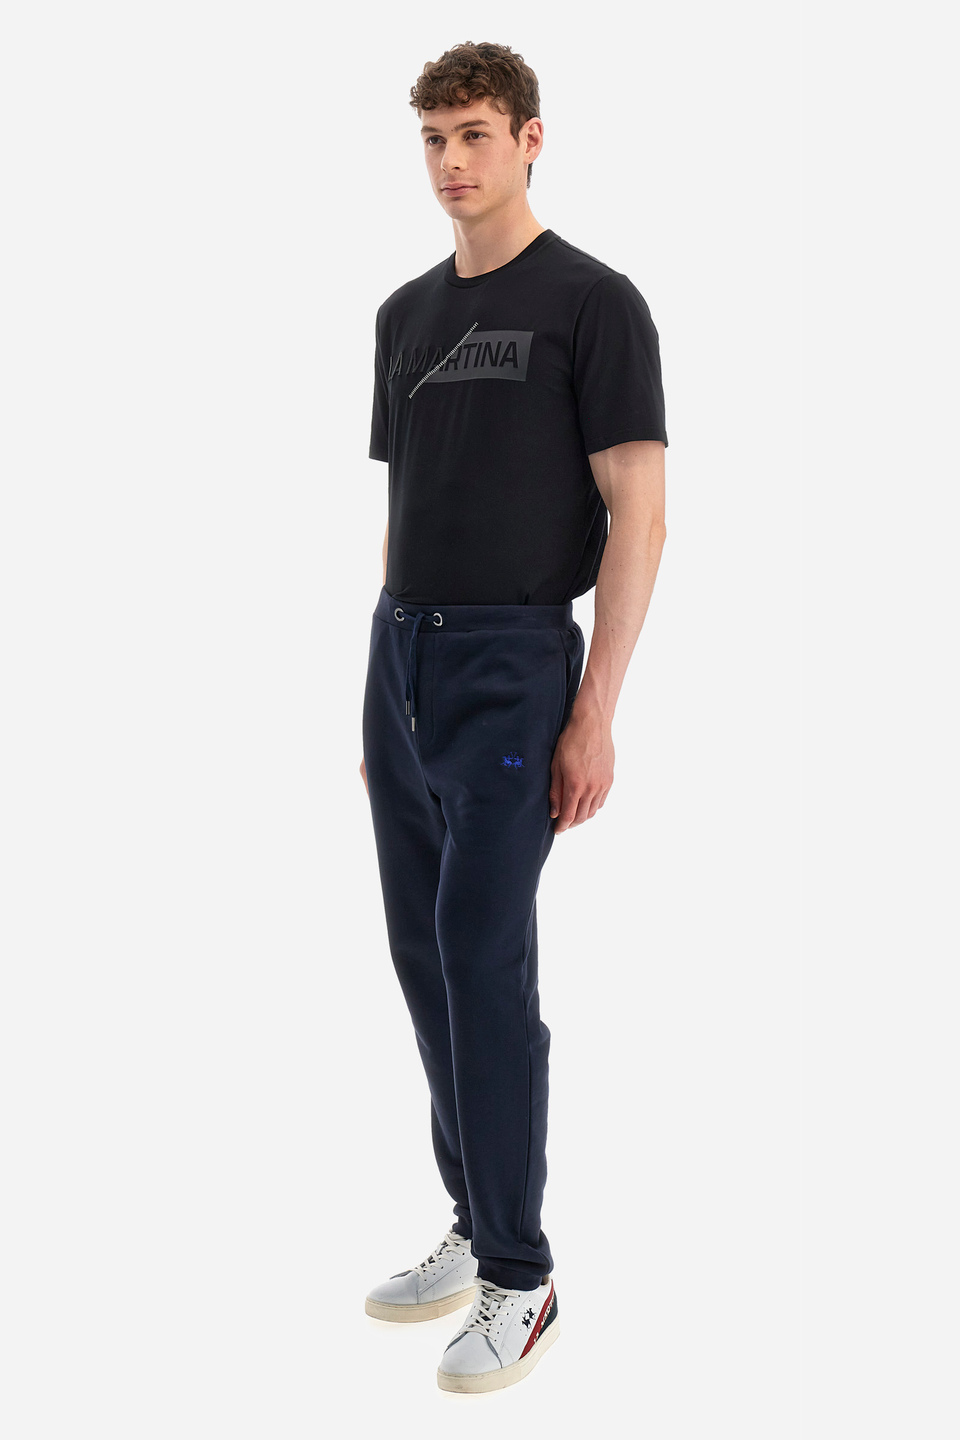 Pantalones de jogging de hombre corte recto - Welton | La Martina - Official Online Shop